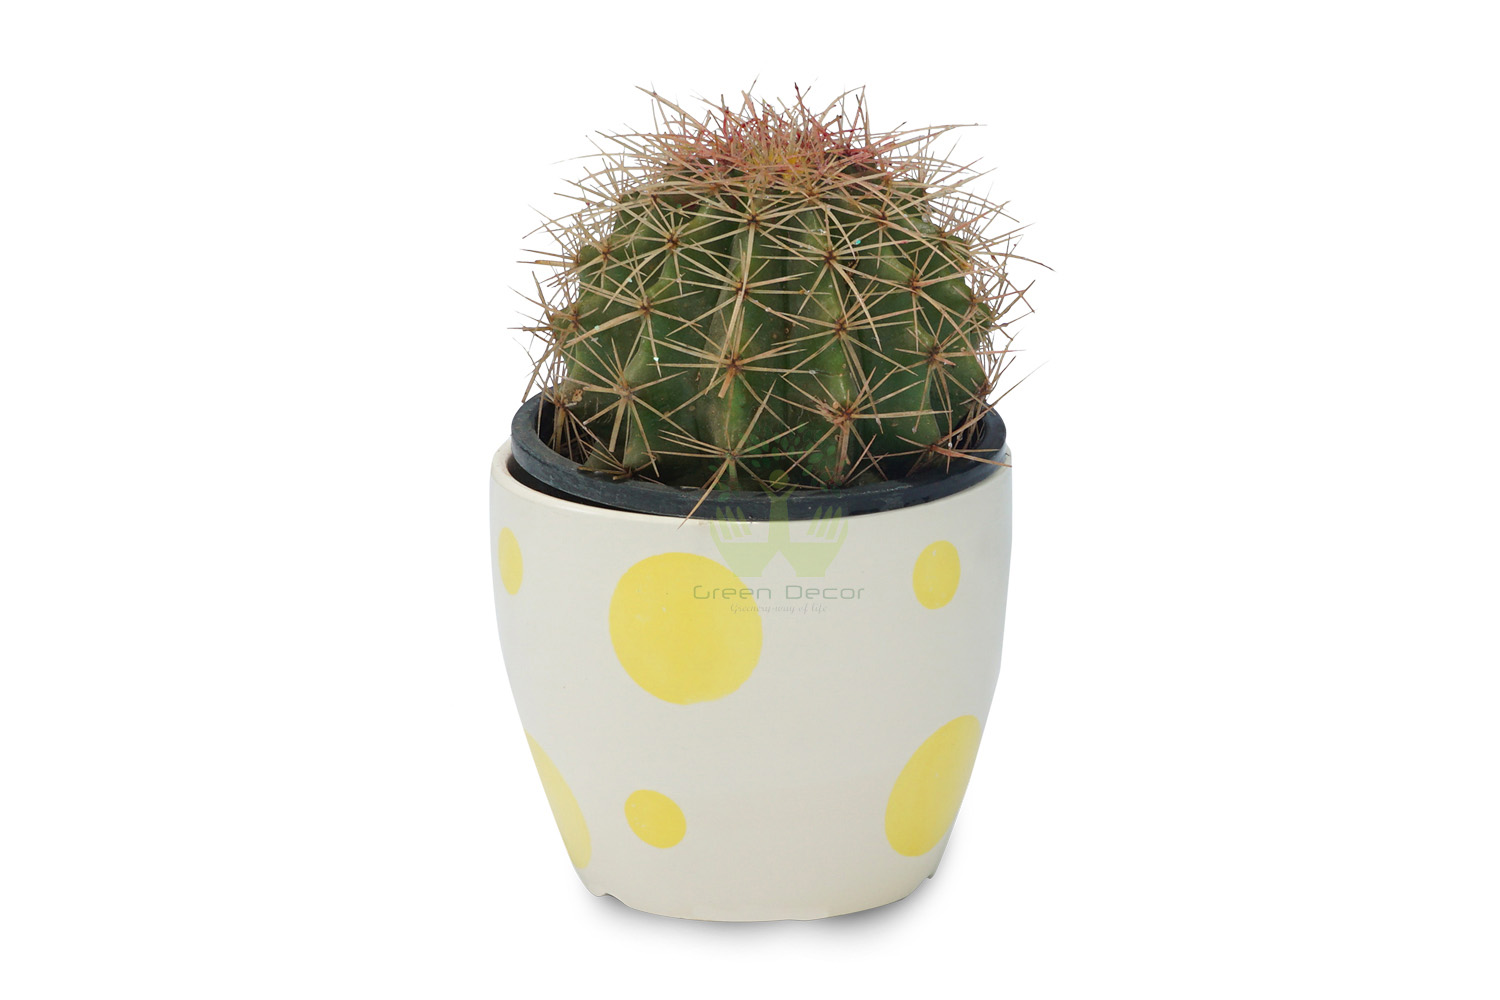 Buy Echinocactus Grusonii Plants , White Pots and seeds in Delhi NCR by the best online nursery shop Greendecor.